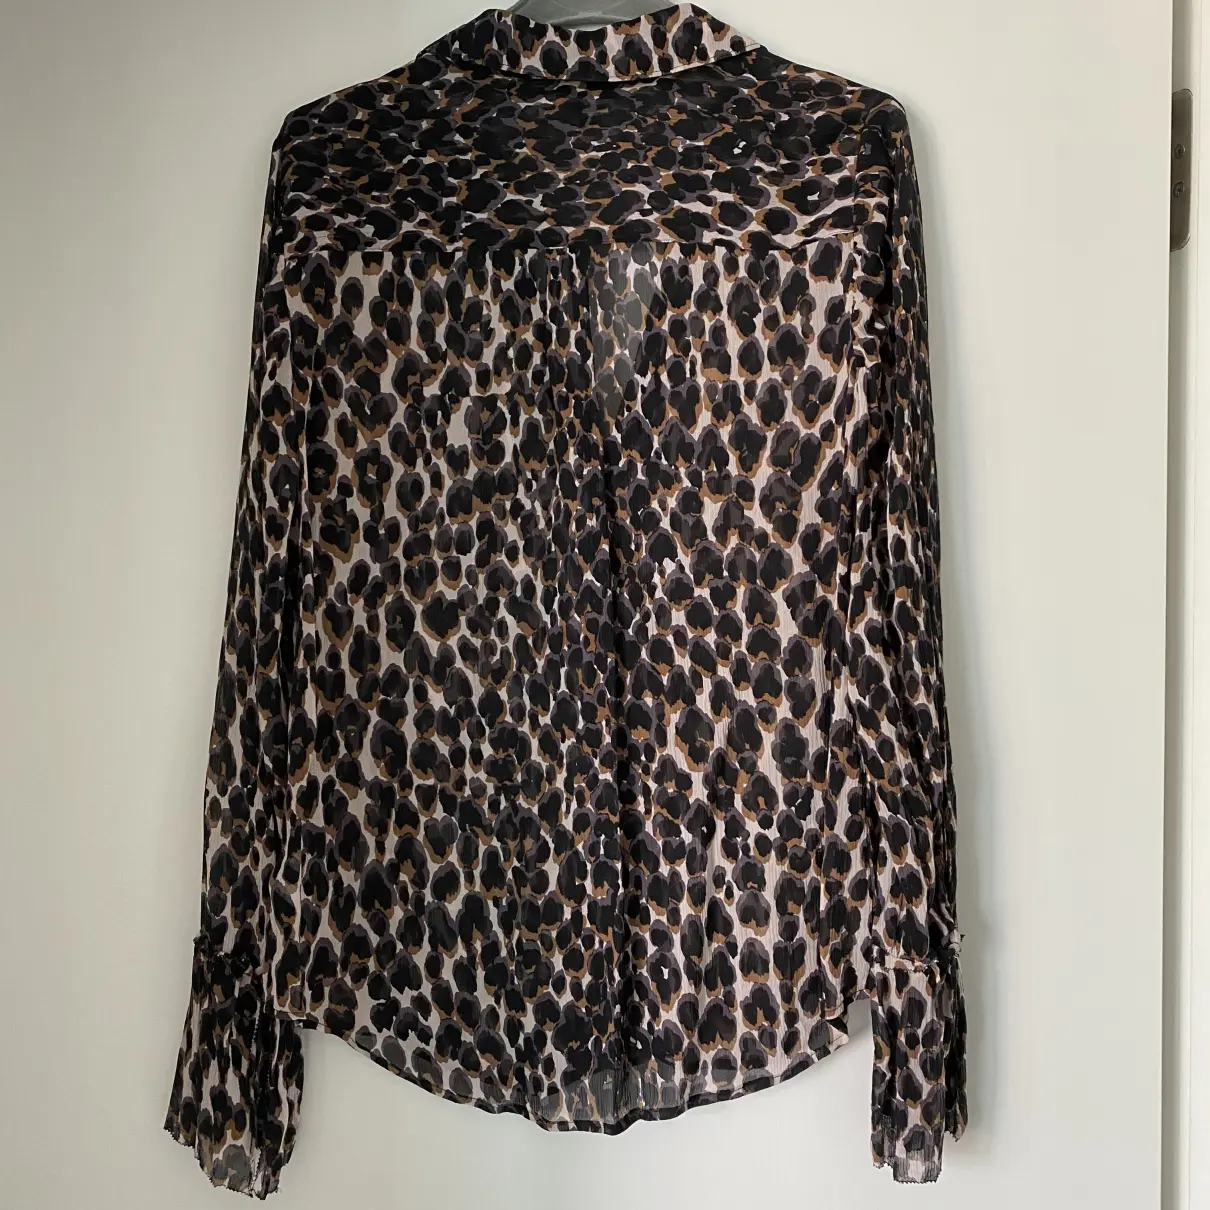 Buy Paige Silk blouse online